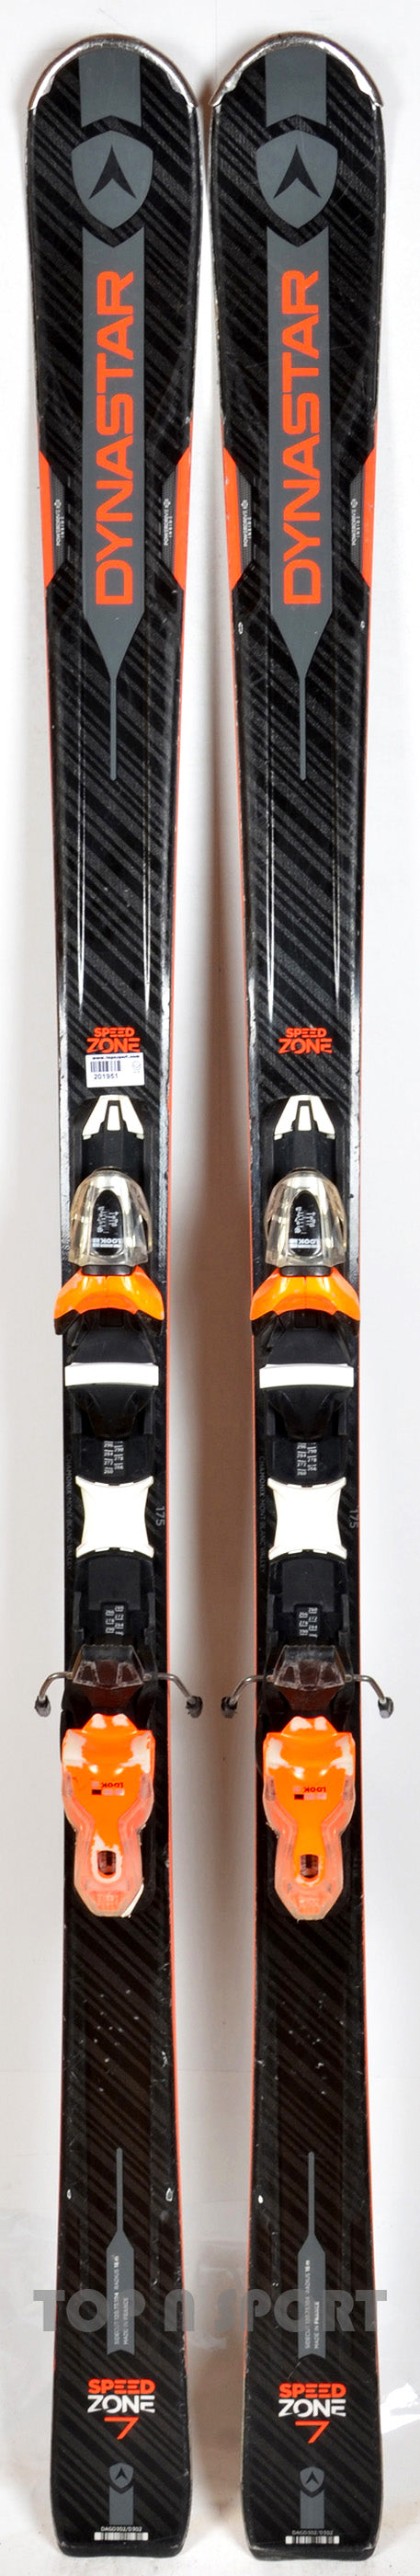 Dynastar SPEED ZONE 7 black - skis d'occasion